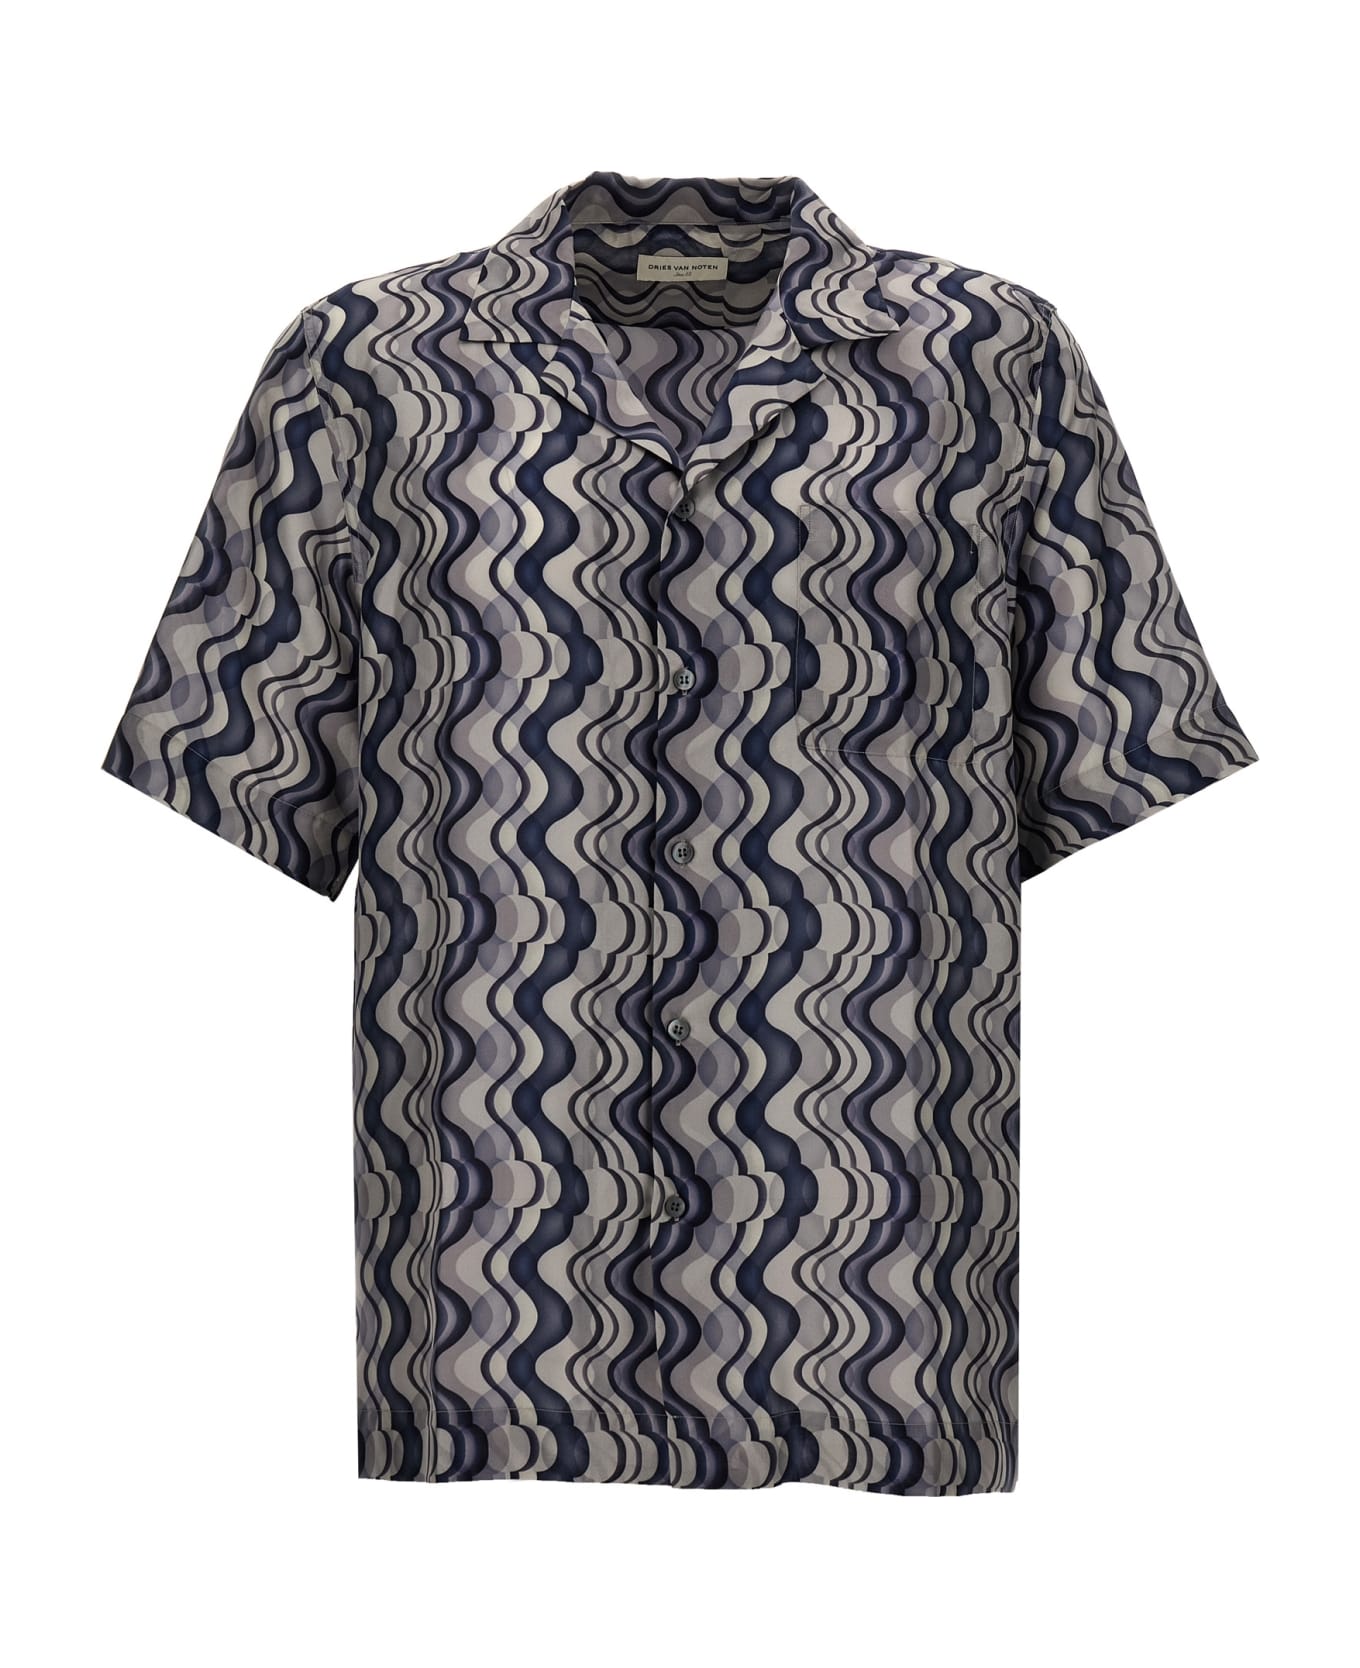 Dries Van Noten 'carltone' Shirt - Multicolor シャツ